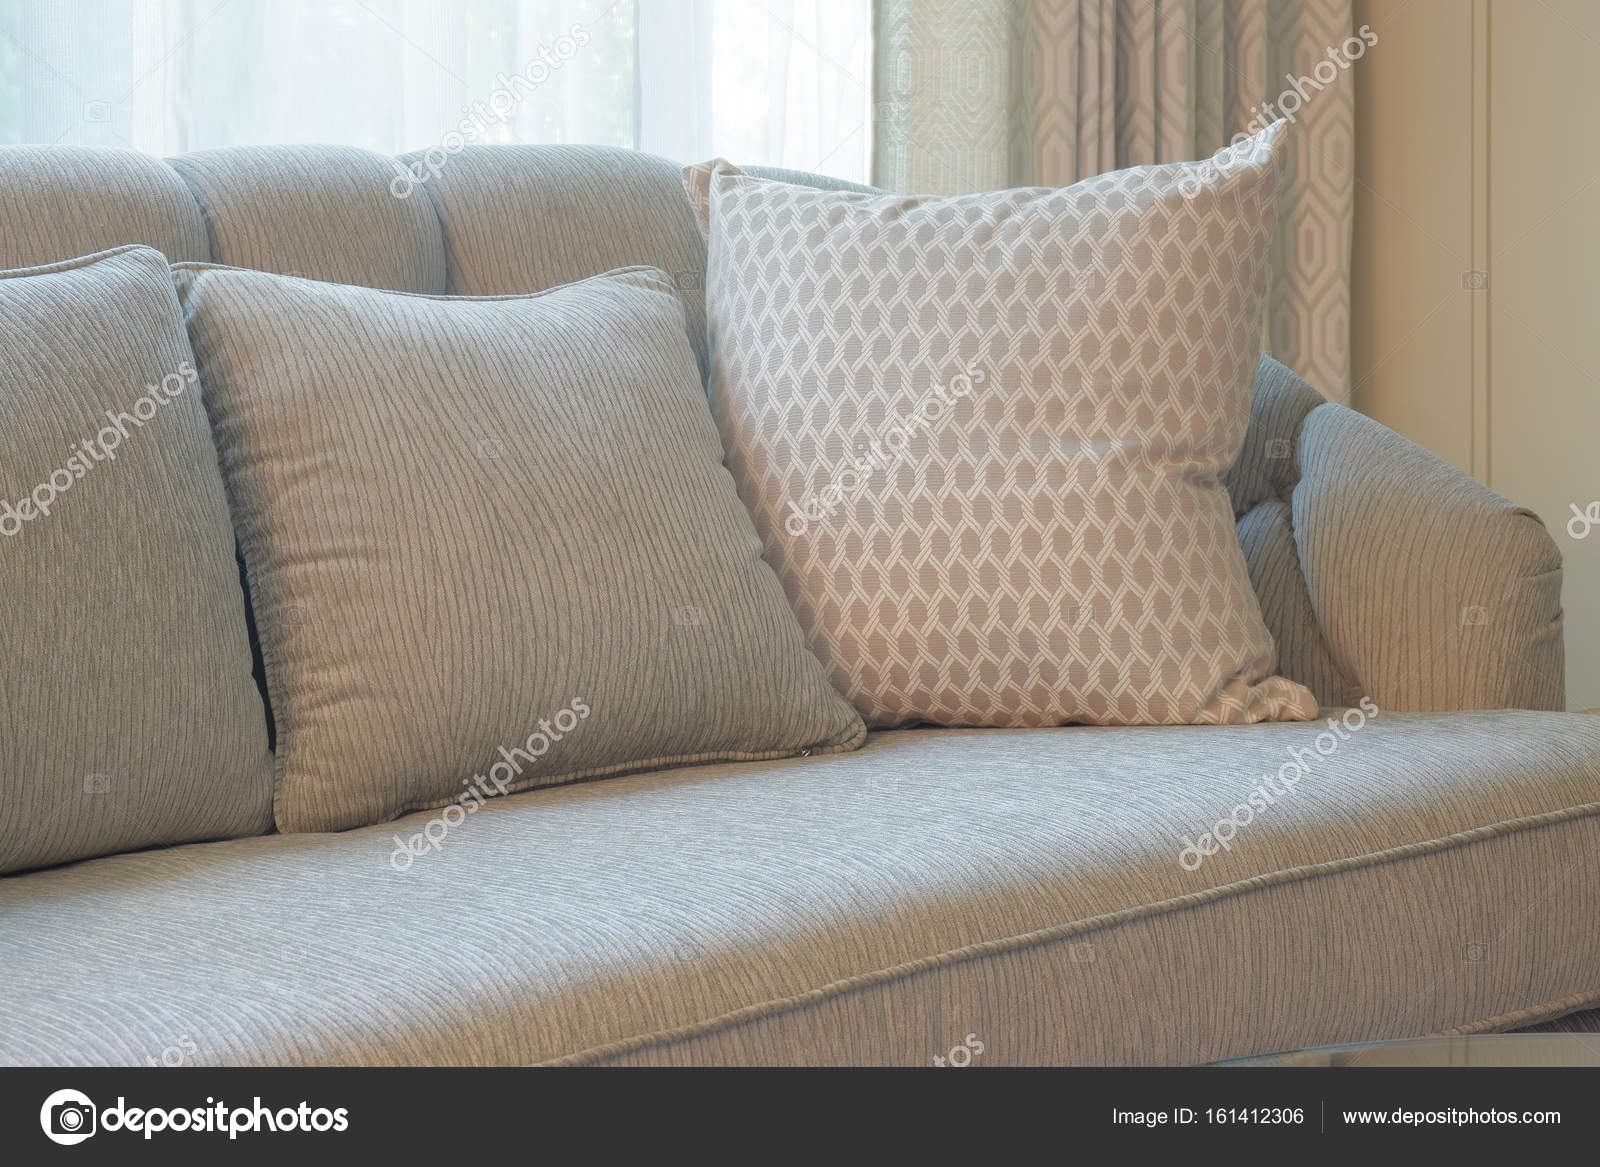 https://st3.depositphotos.com/6200870/16141/i/1600/depositphotos_161412306-stock-photo-comfy-sofa-with-pillows-in.jpg